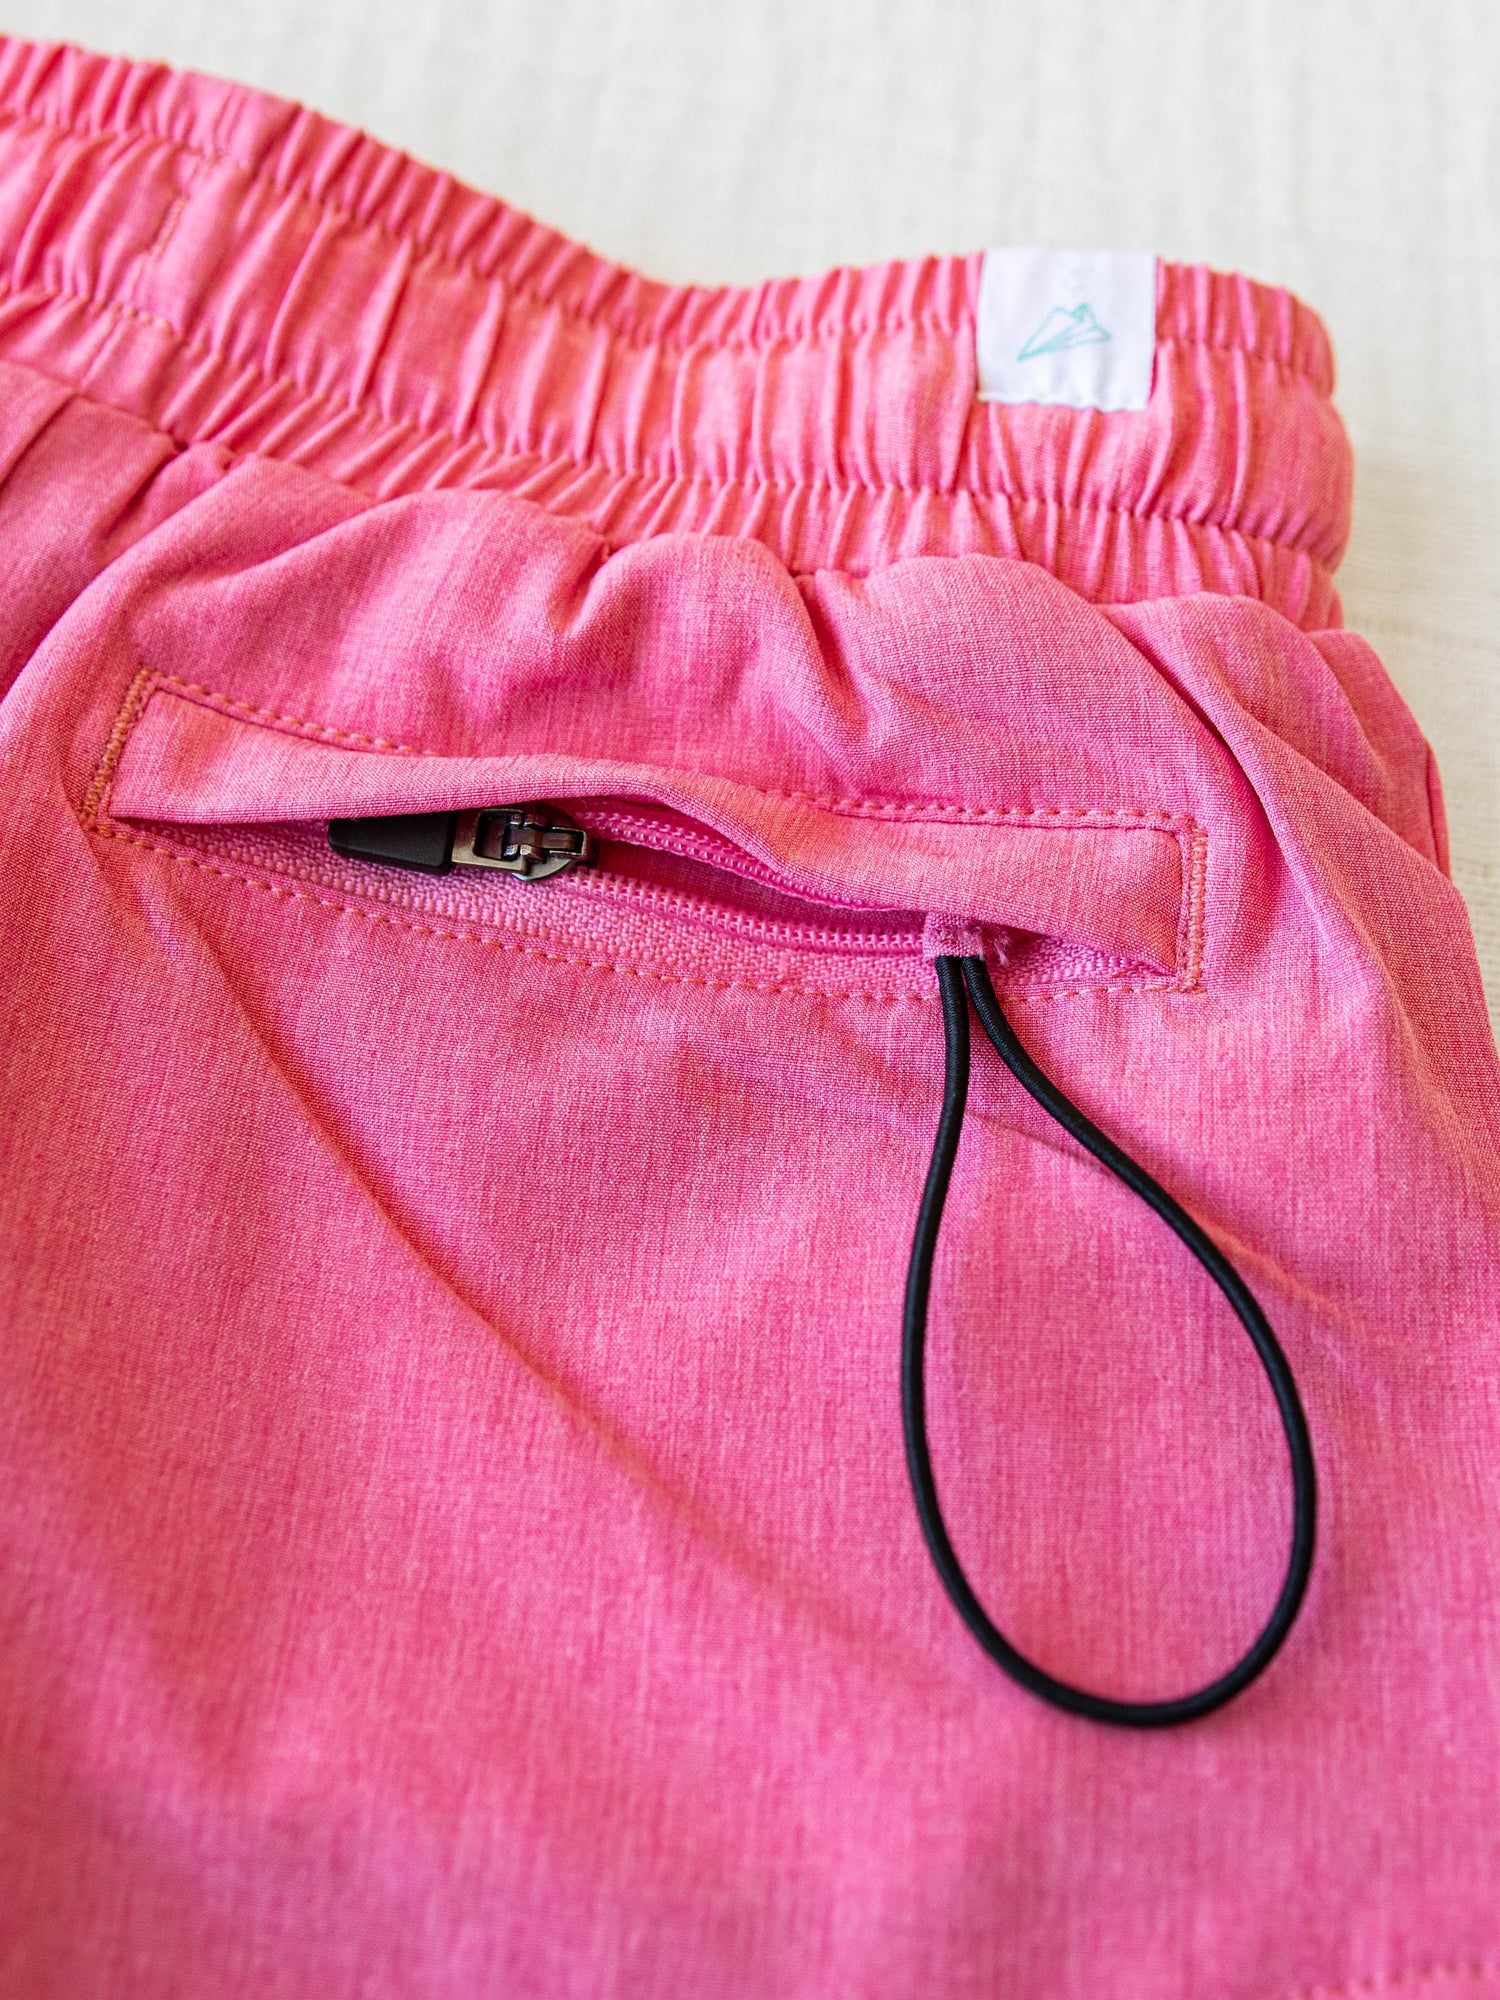 Closeup of the zippered back pocket.